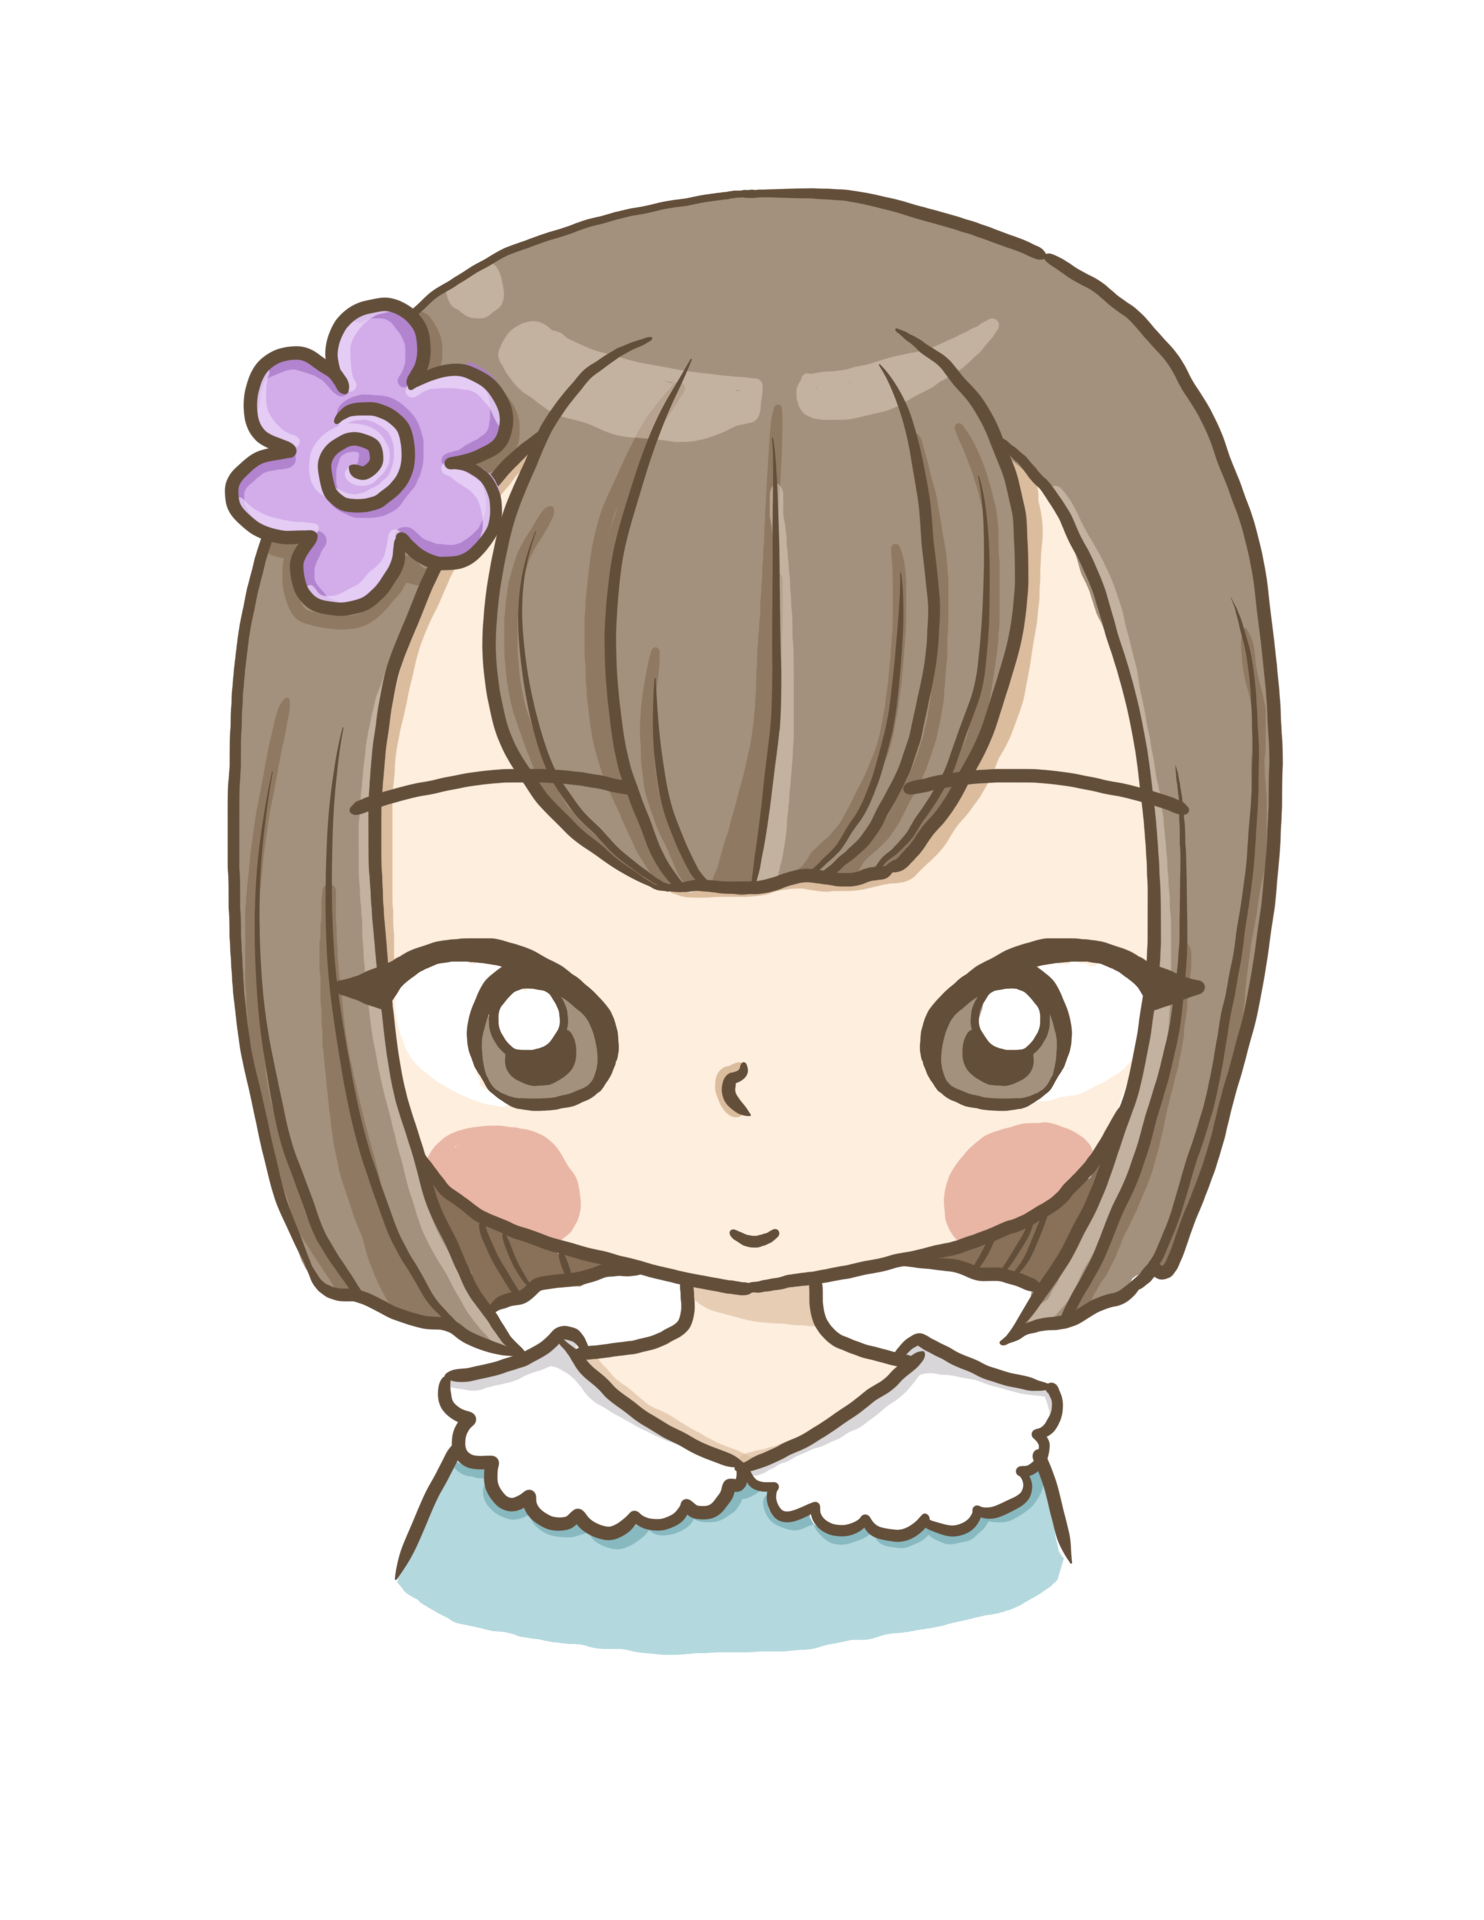 Avatar Anime Manga Girls Schoolgirl Japanese Vector có sẵn miễn phí bản  quyền 780289123  Shutterstock